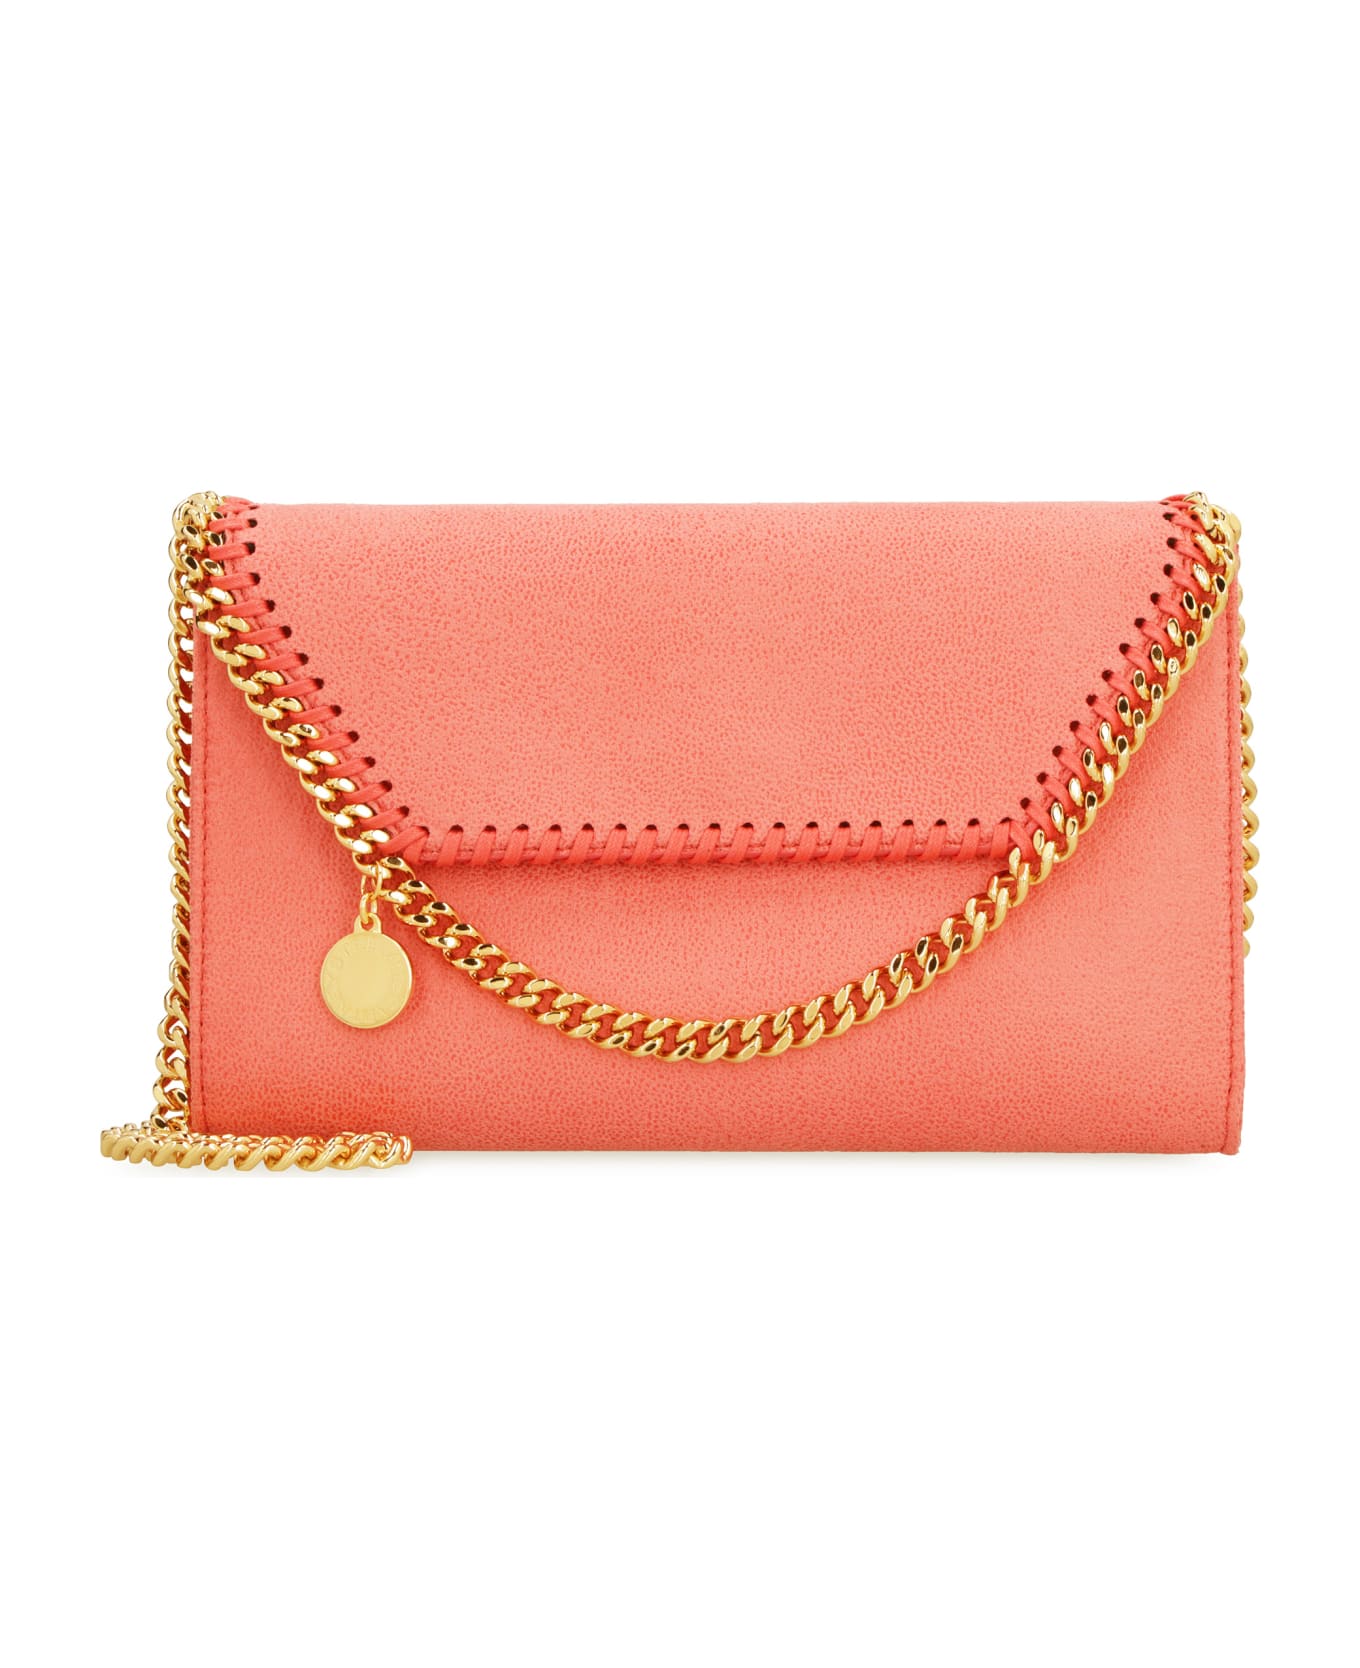 Stella McCartney Falabella Mini Crossbody Bag - Bright pink